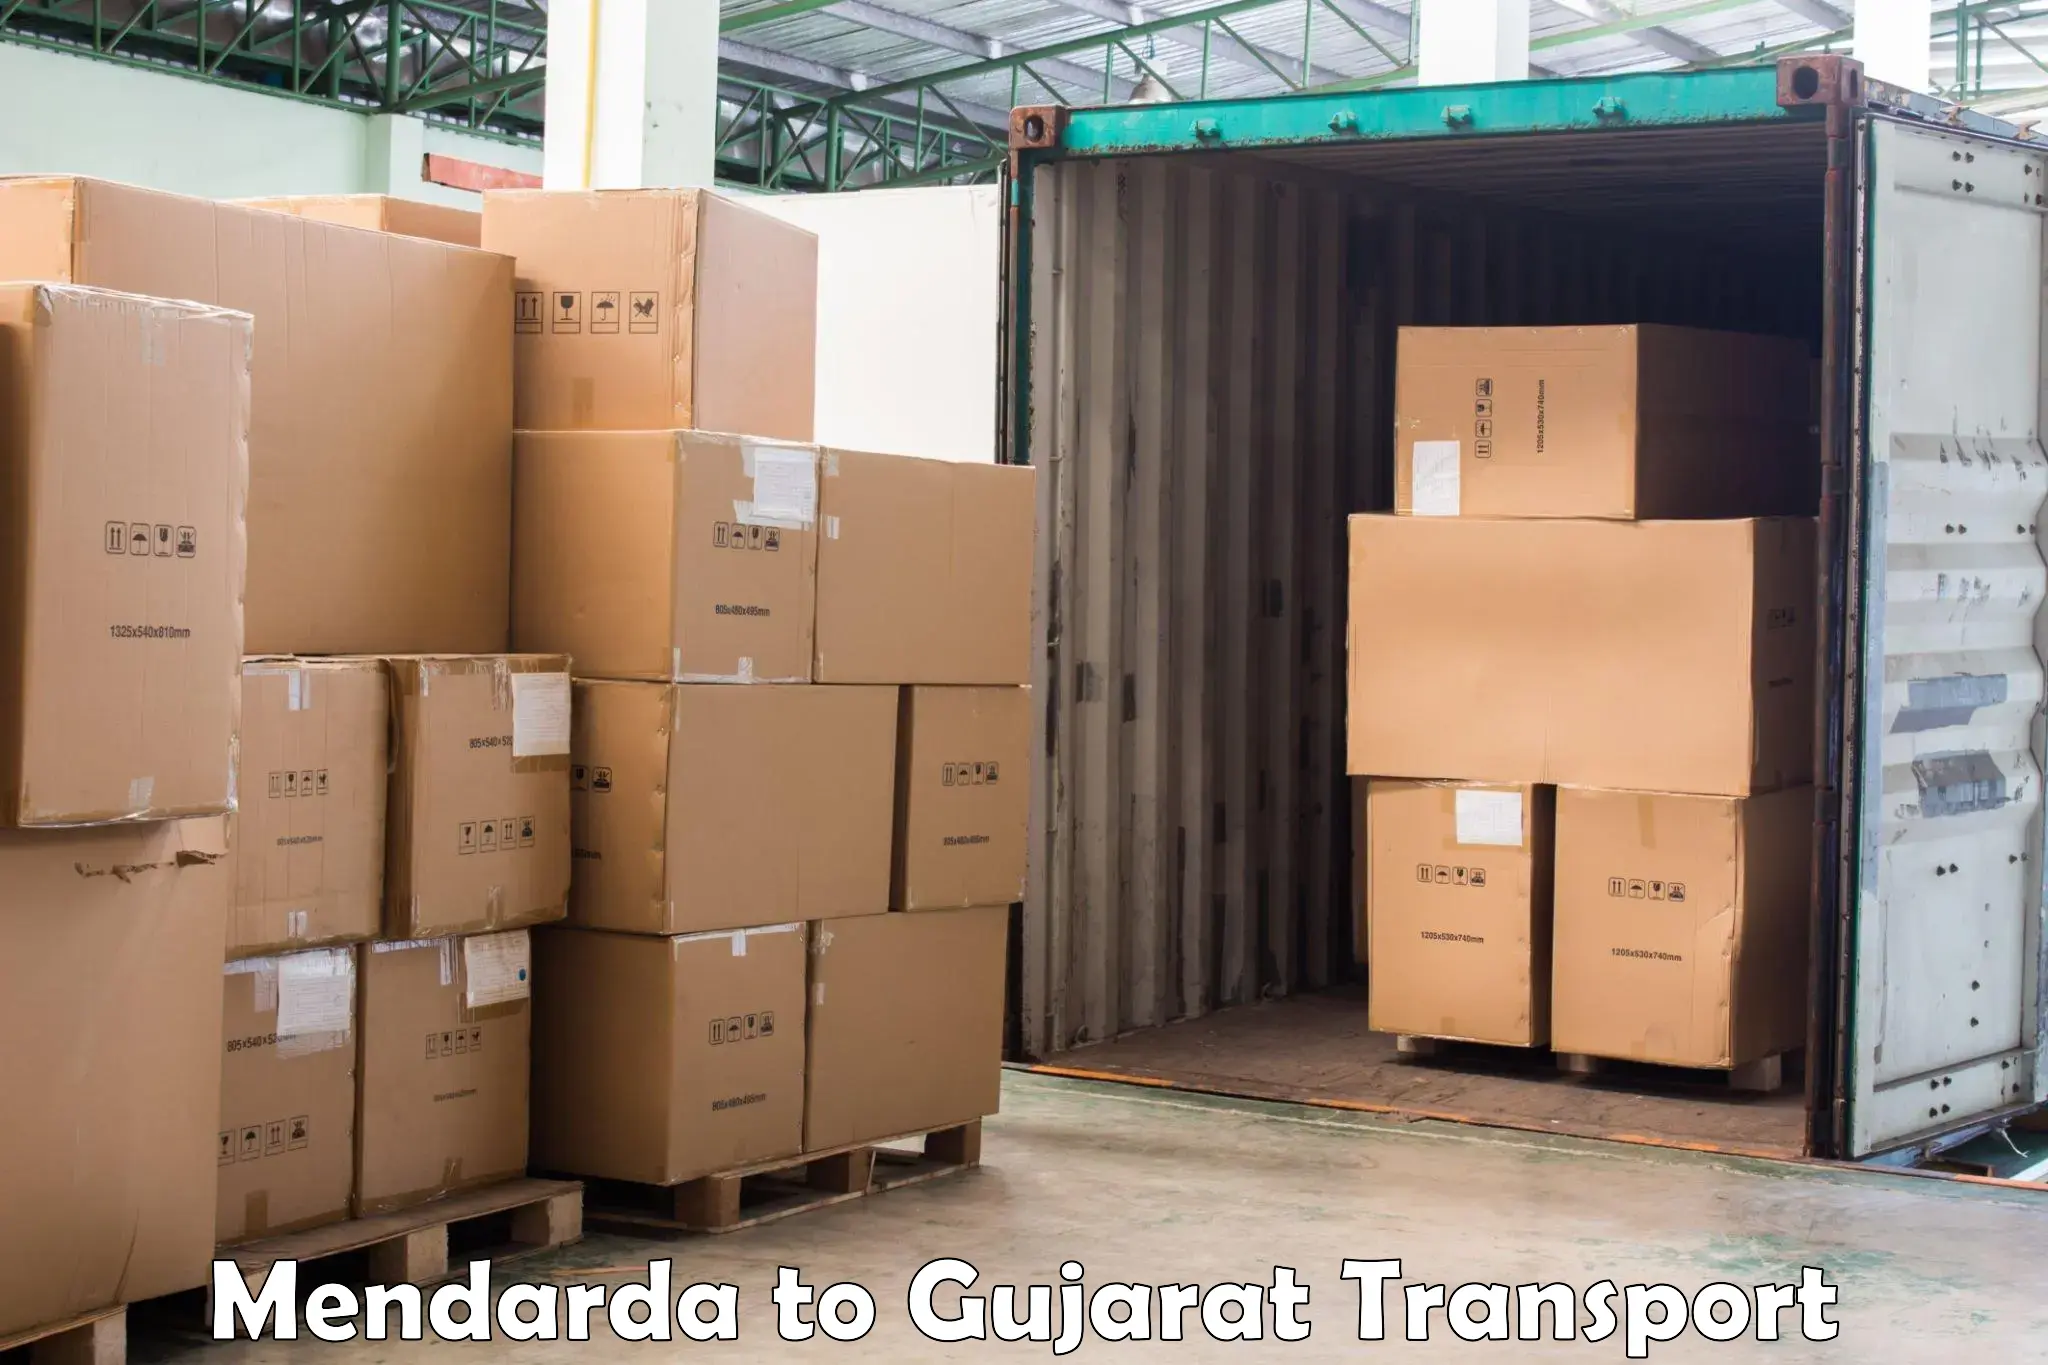 Sending bike to another city Mendarda to Gujarat